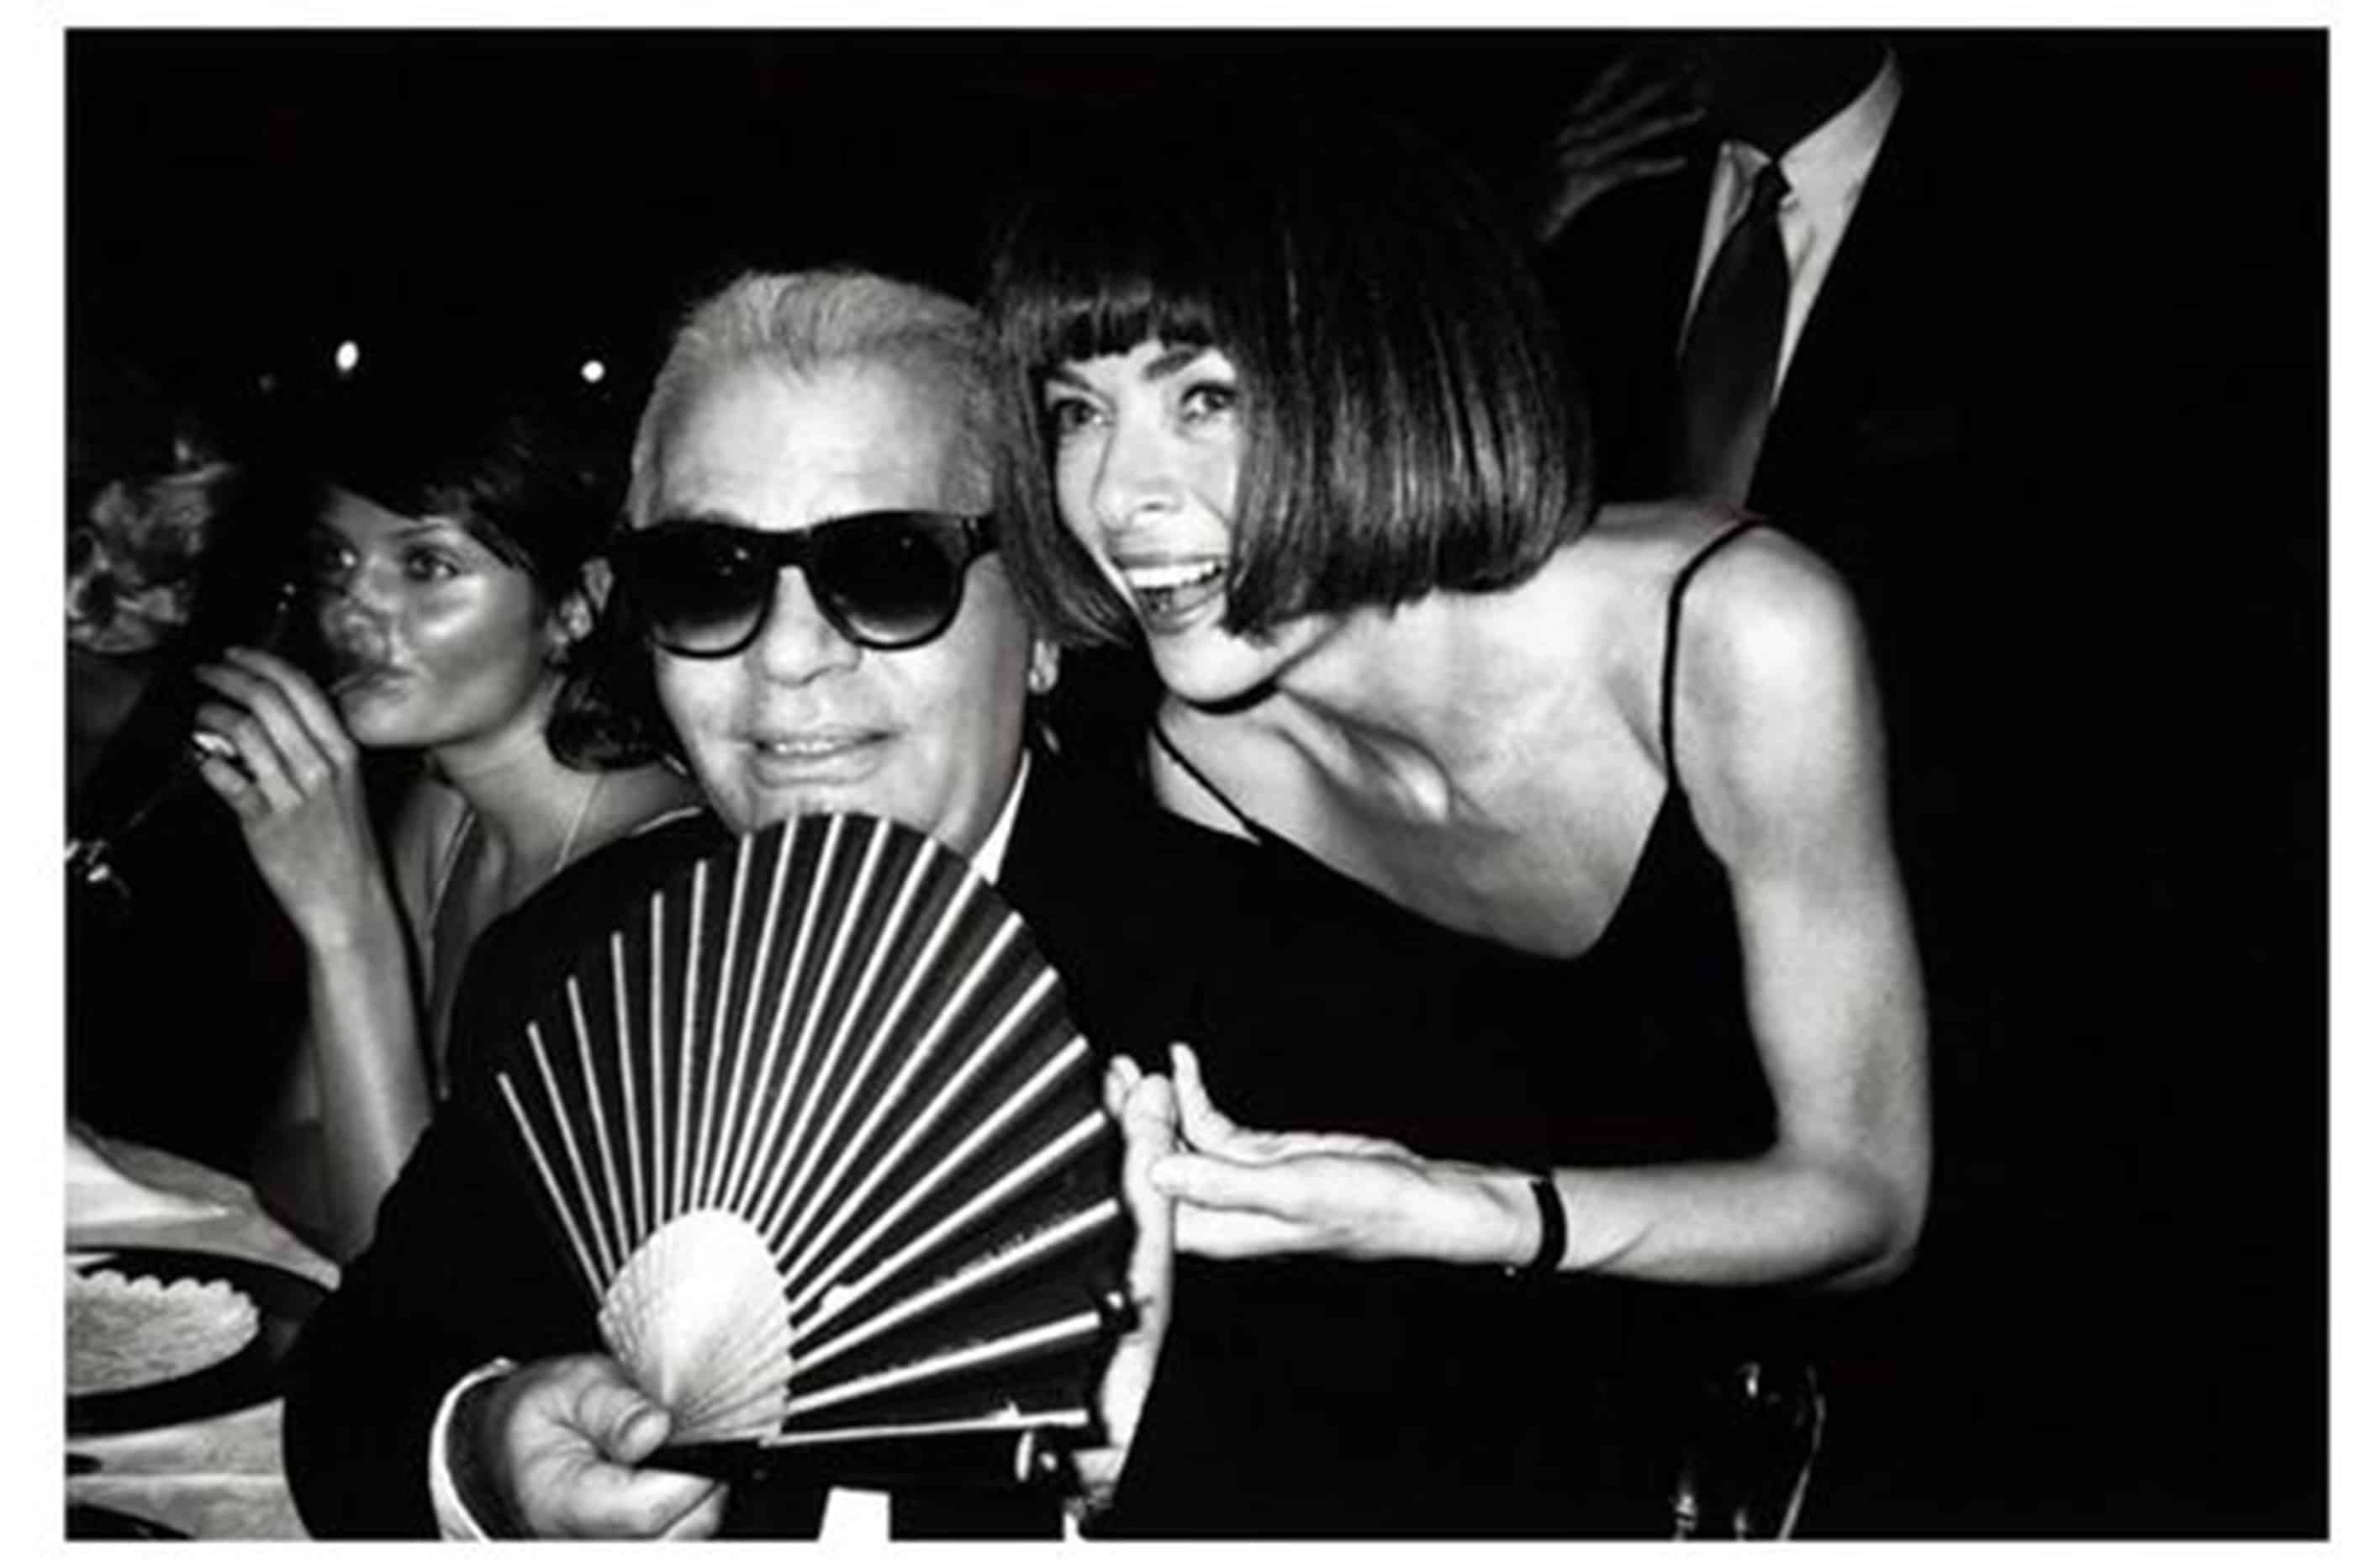 Met Gala 2023 dress code? “Karl Lagerfeld: A line of beauty